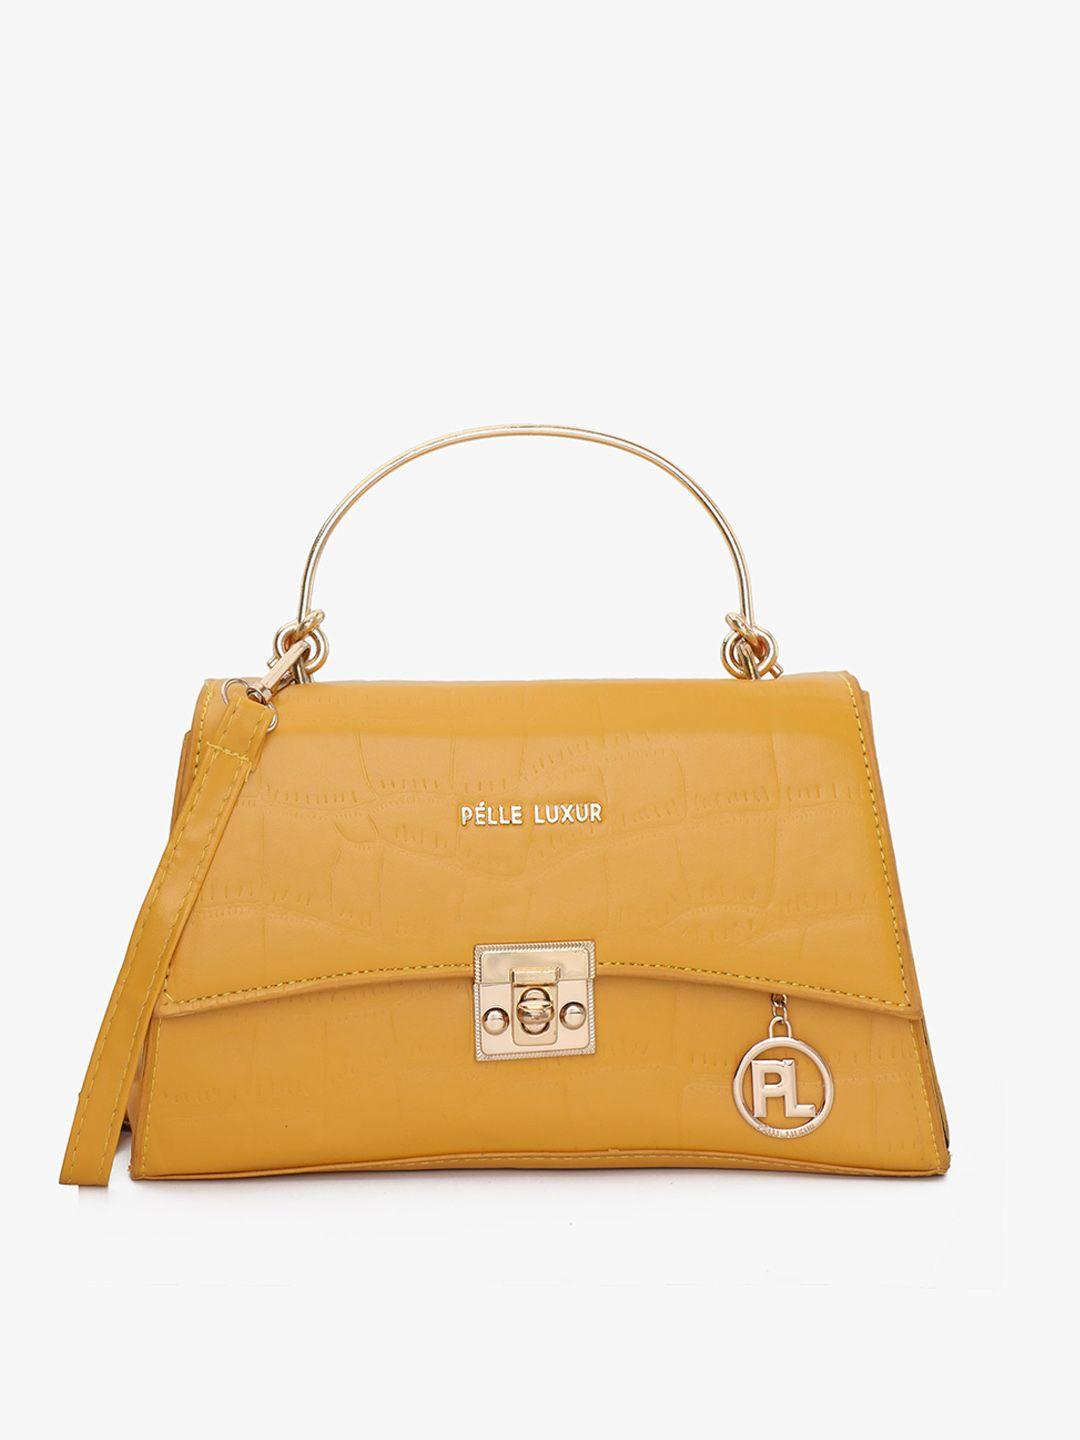 pelle luxur yellow pu structured satchel